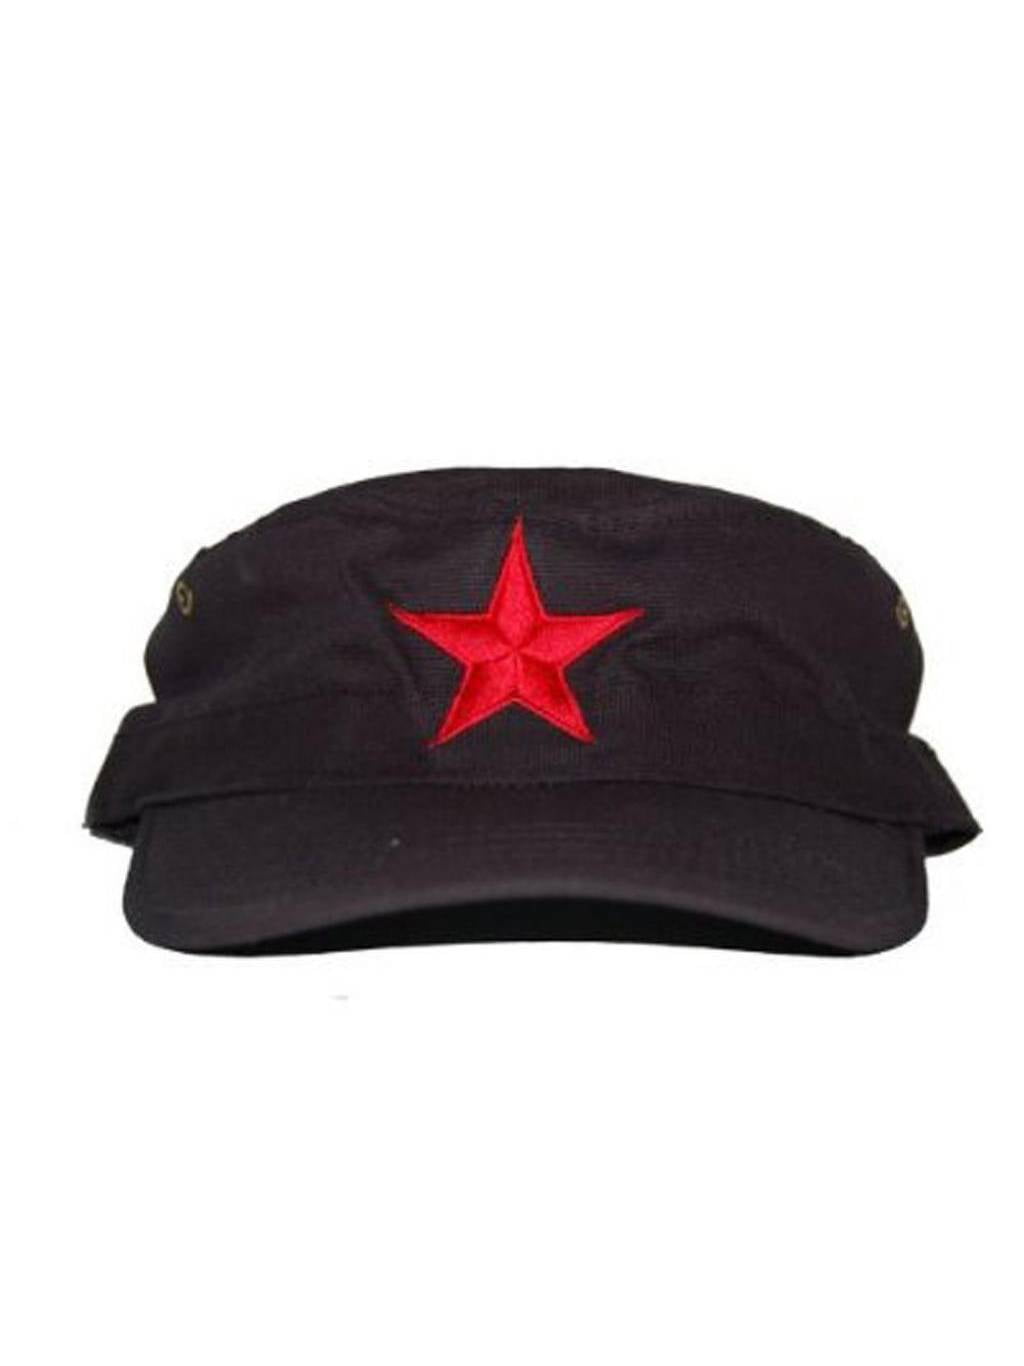 New Army Cadet Hat Red Star - Black - Walmart.com